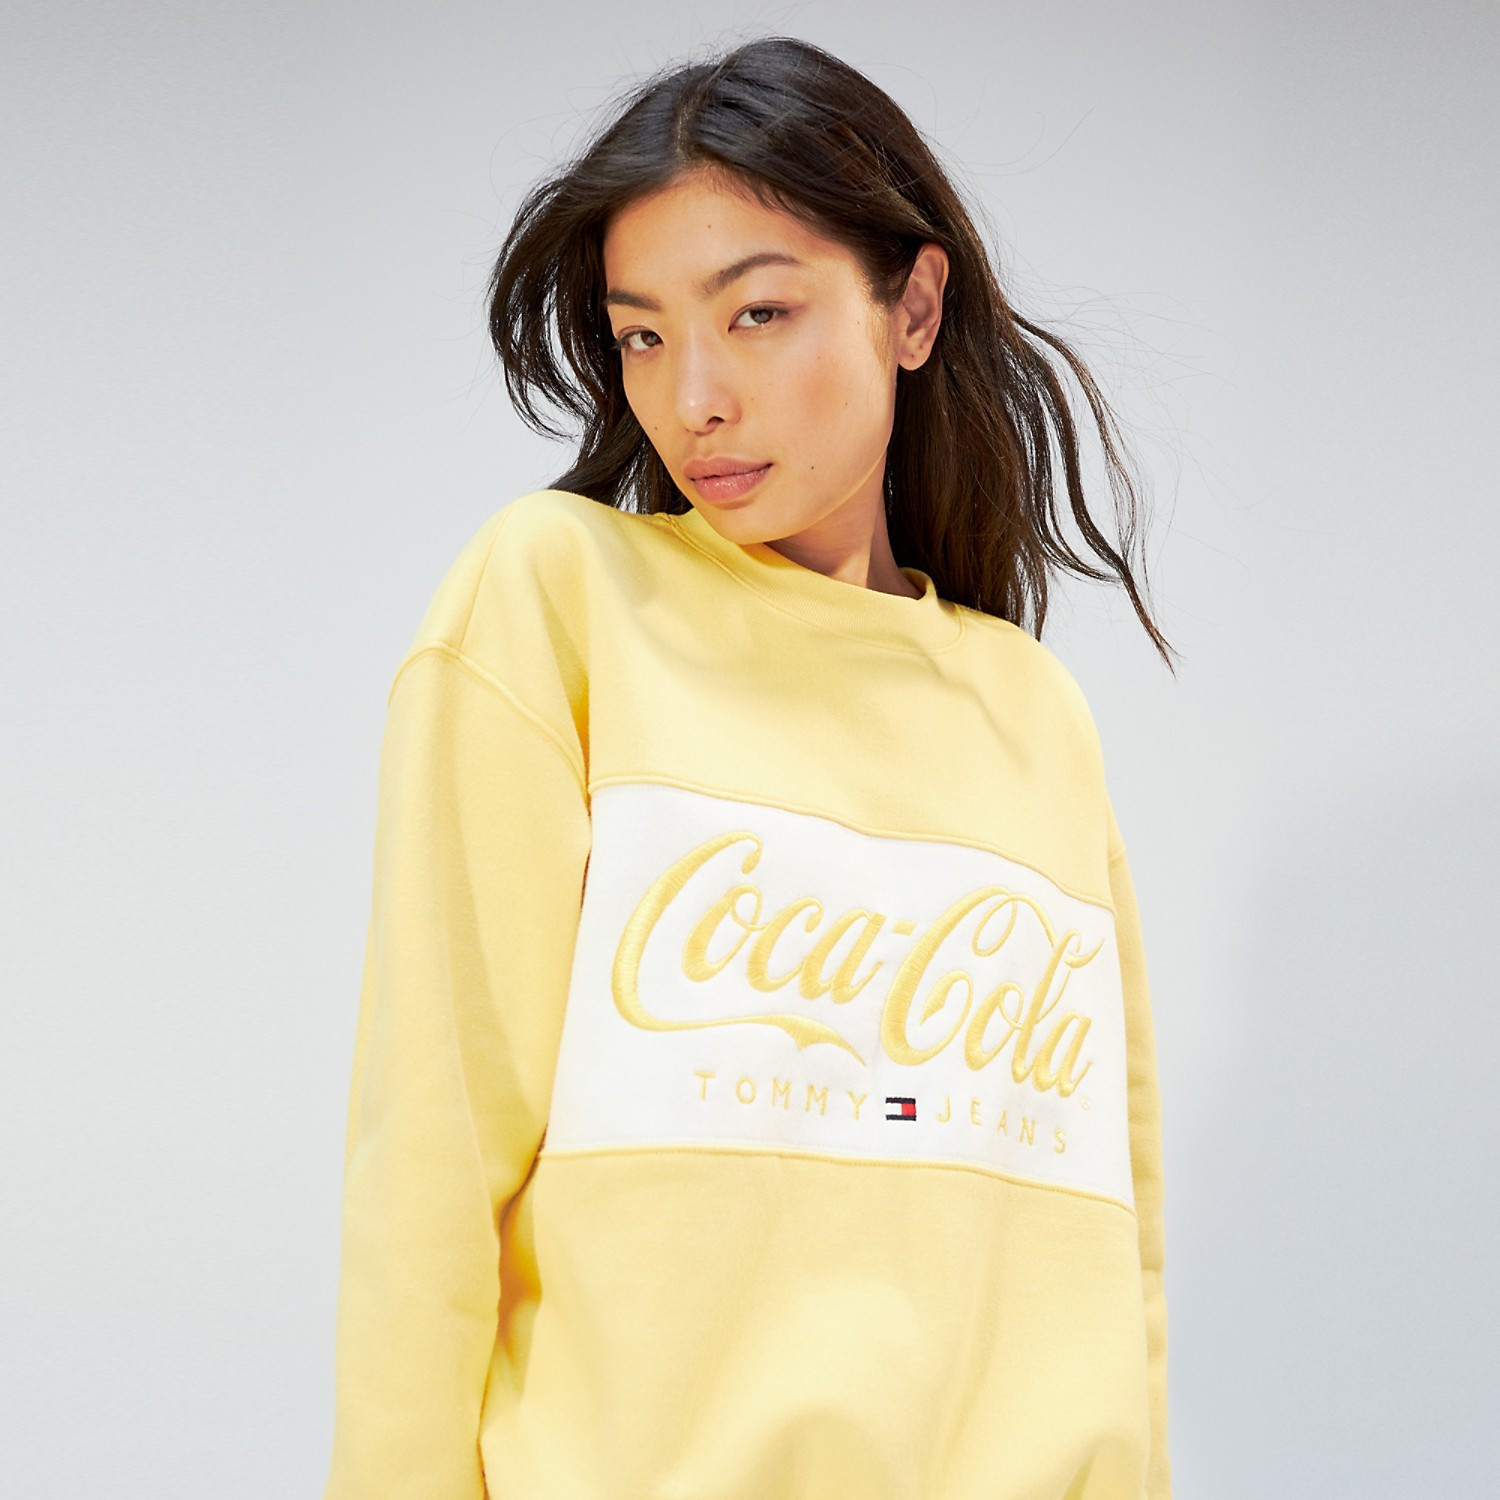 Tommy Hilfiger womens sweatshirt Coca Cola